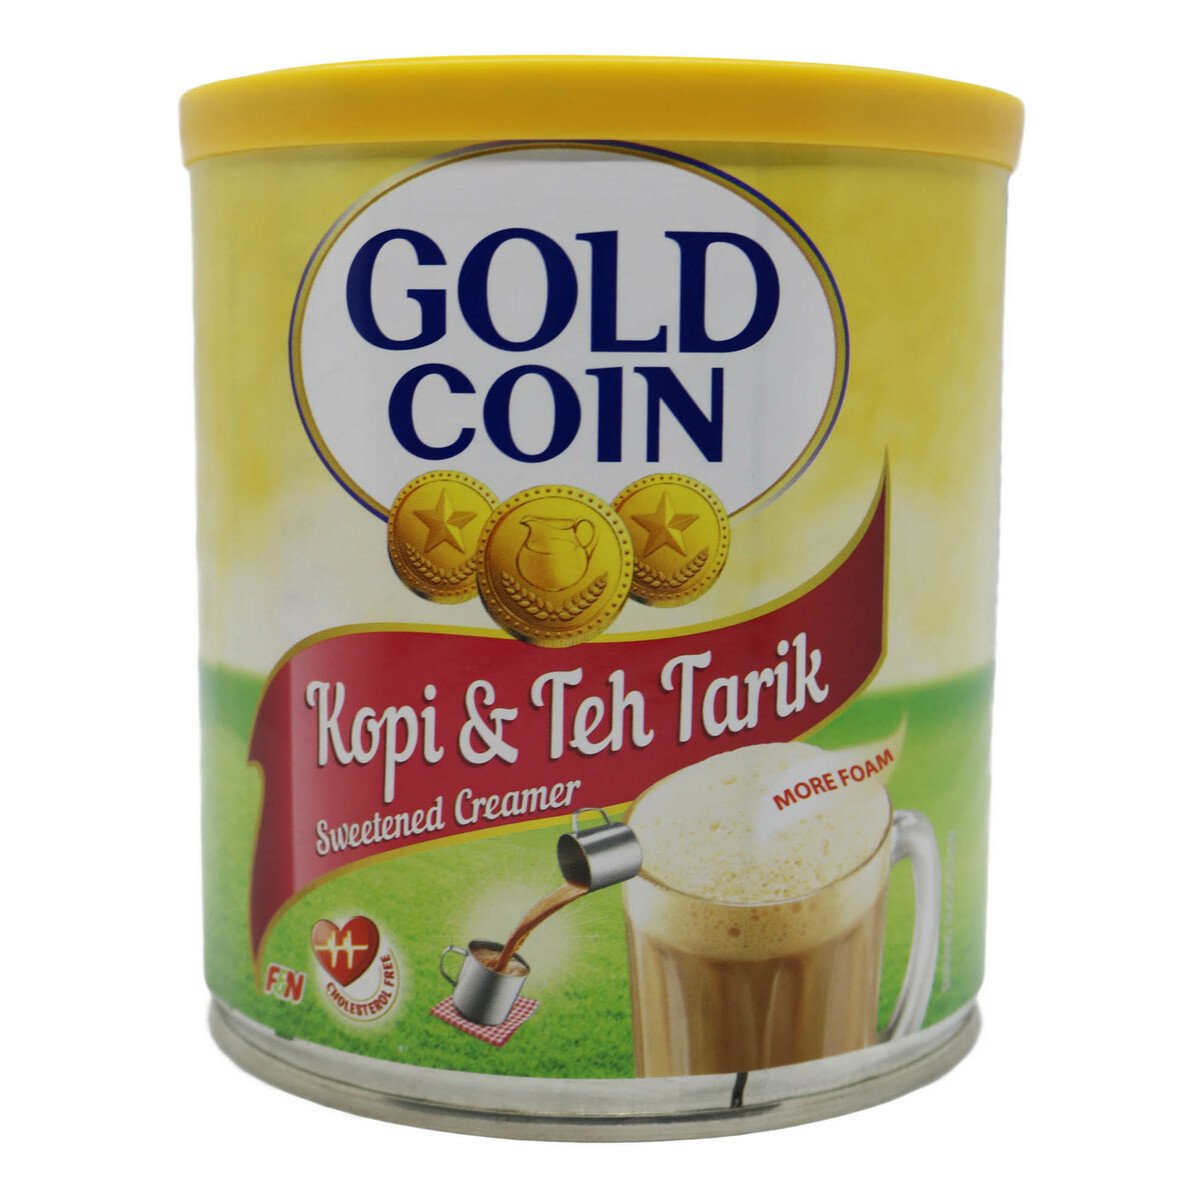 F&N Gold Coin Kopi & Teh Tarik 1kg